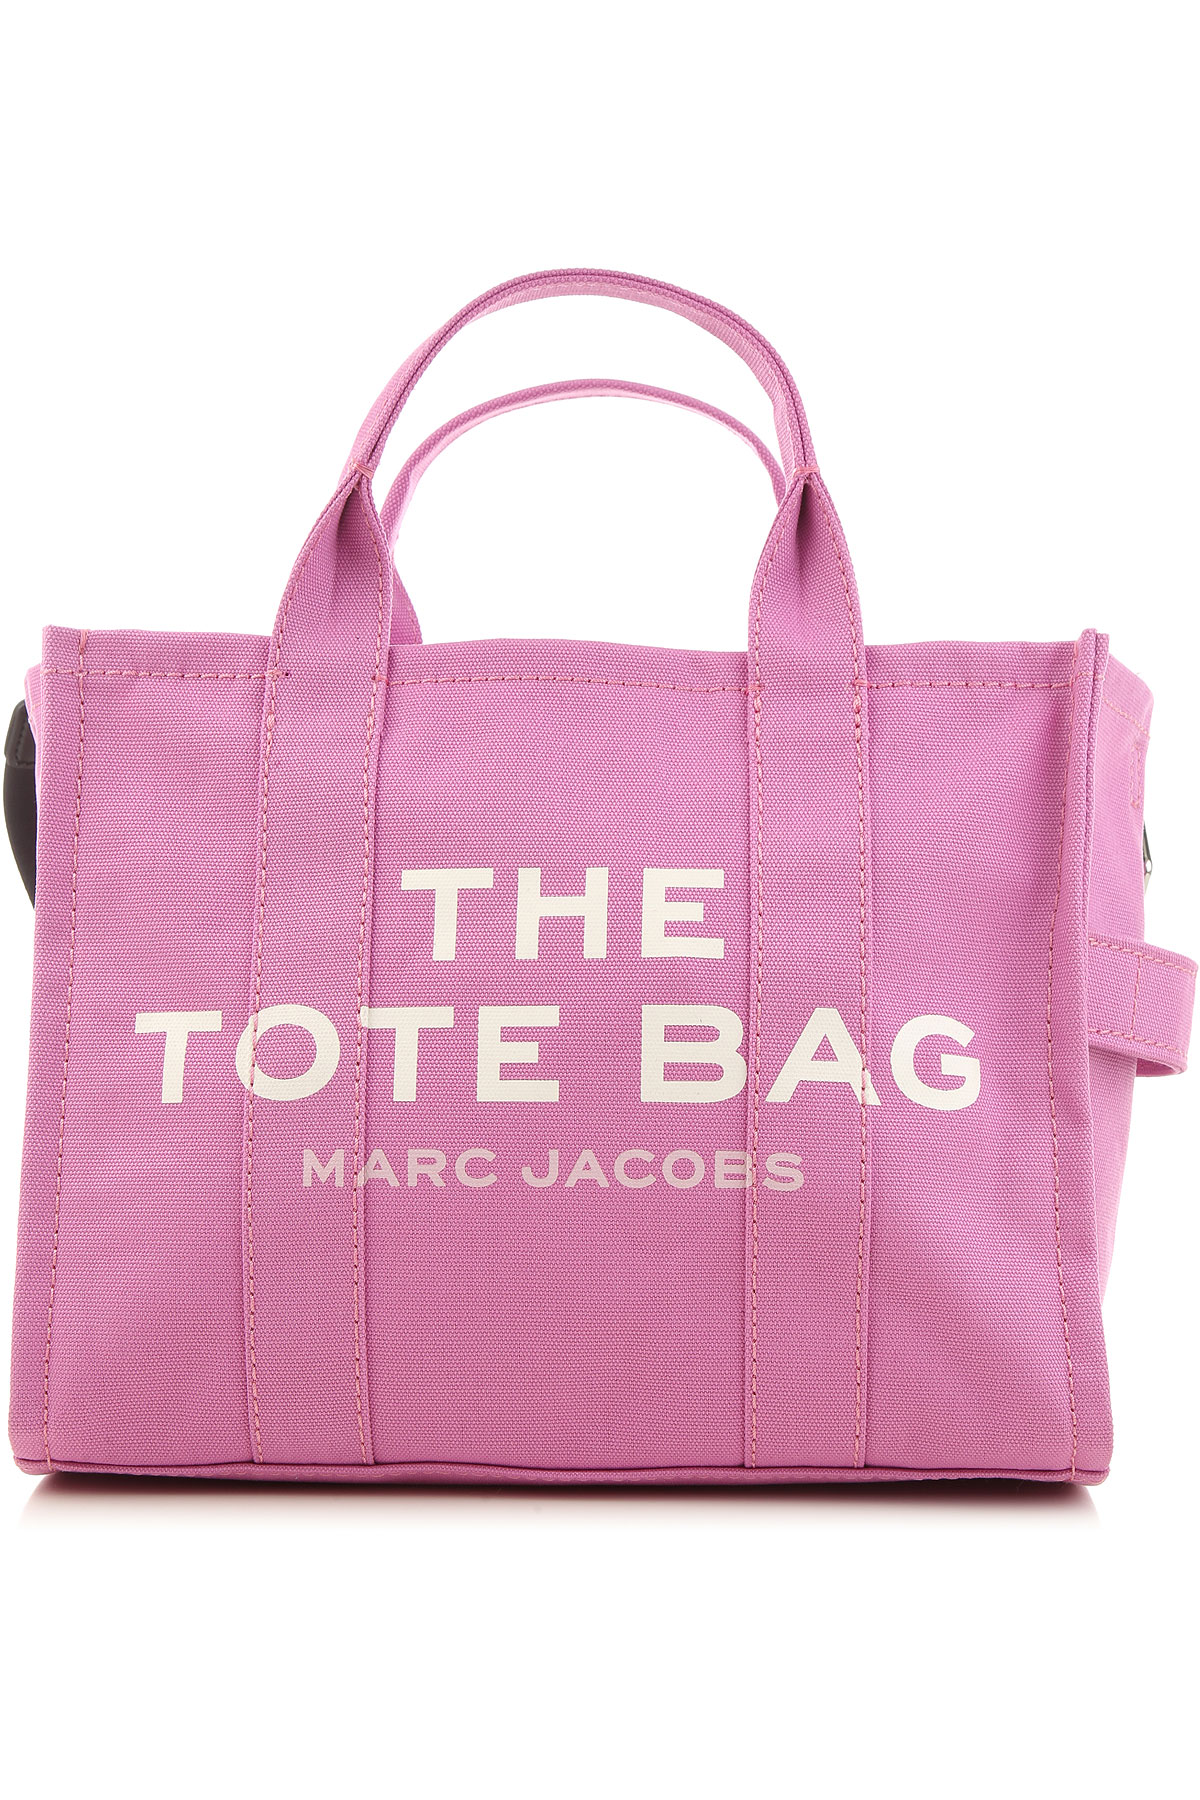 Handbags Marc Jacobs, Style code: m0016161-957-